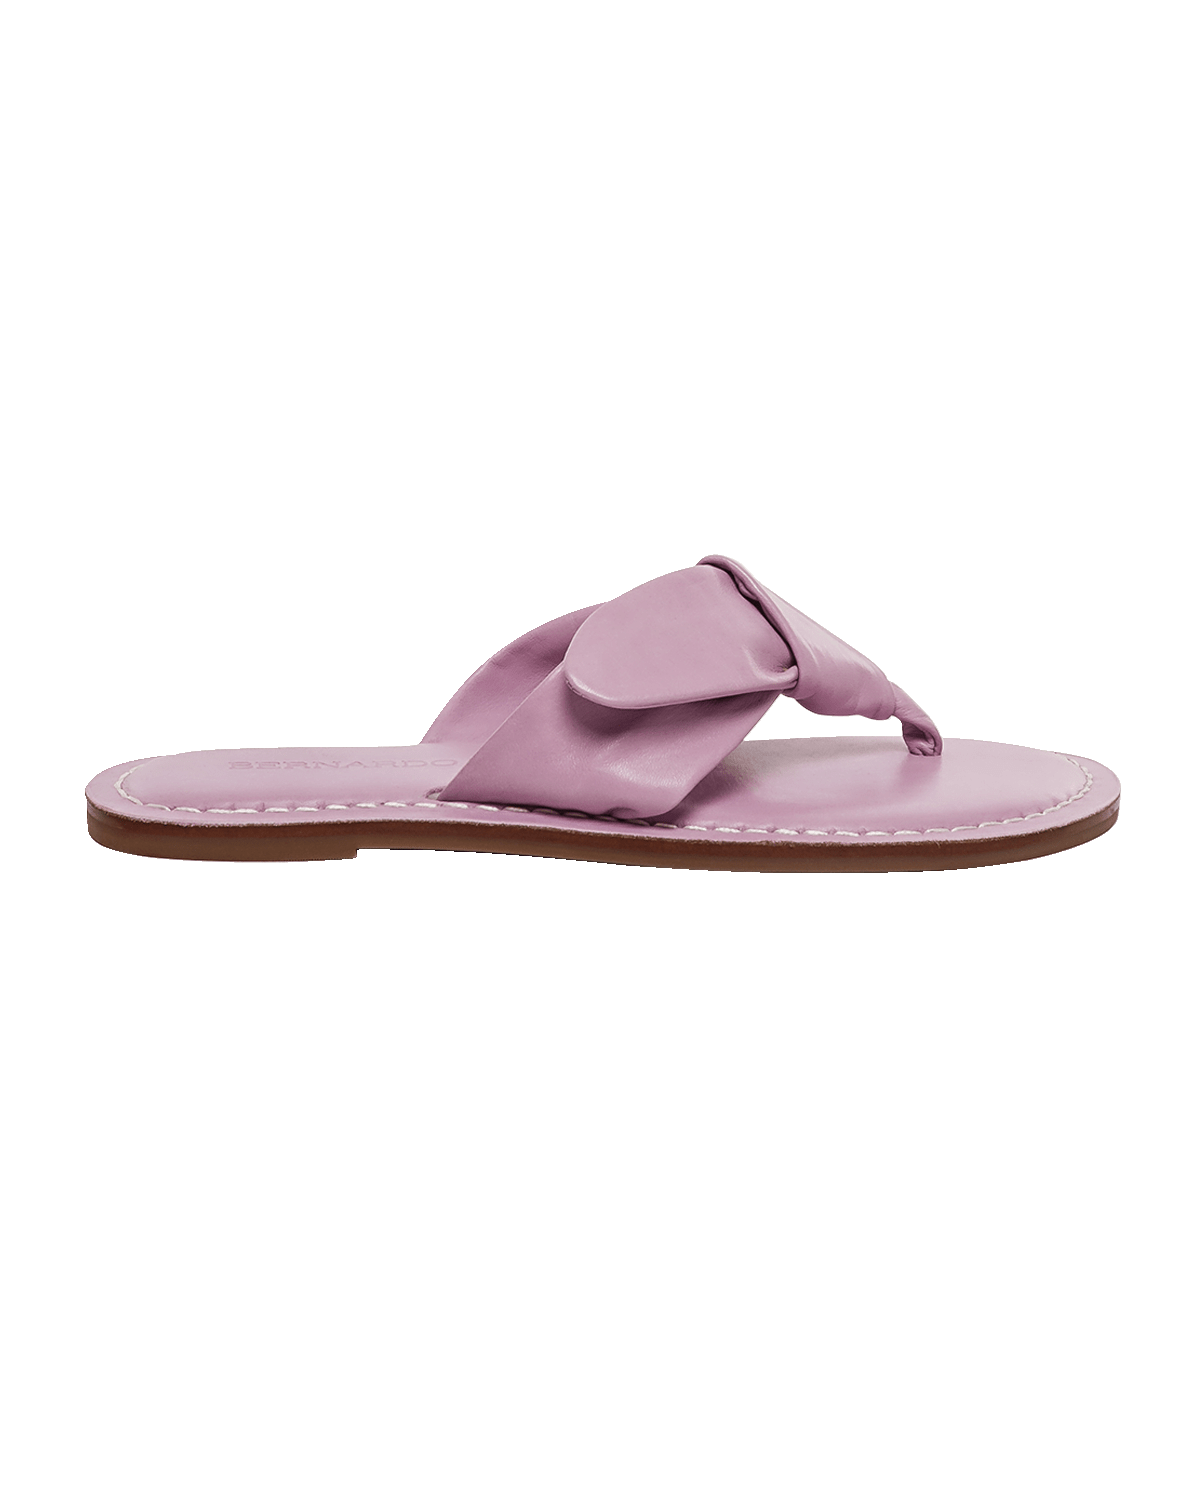 JSlides Yuri Crisscross Leather Thong Sandals | Neiman Marcus